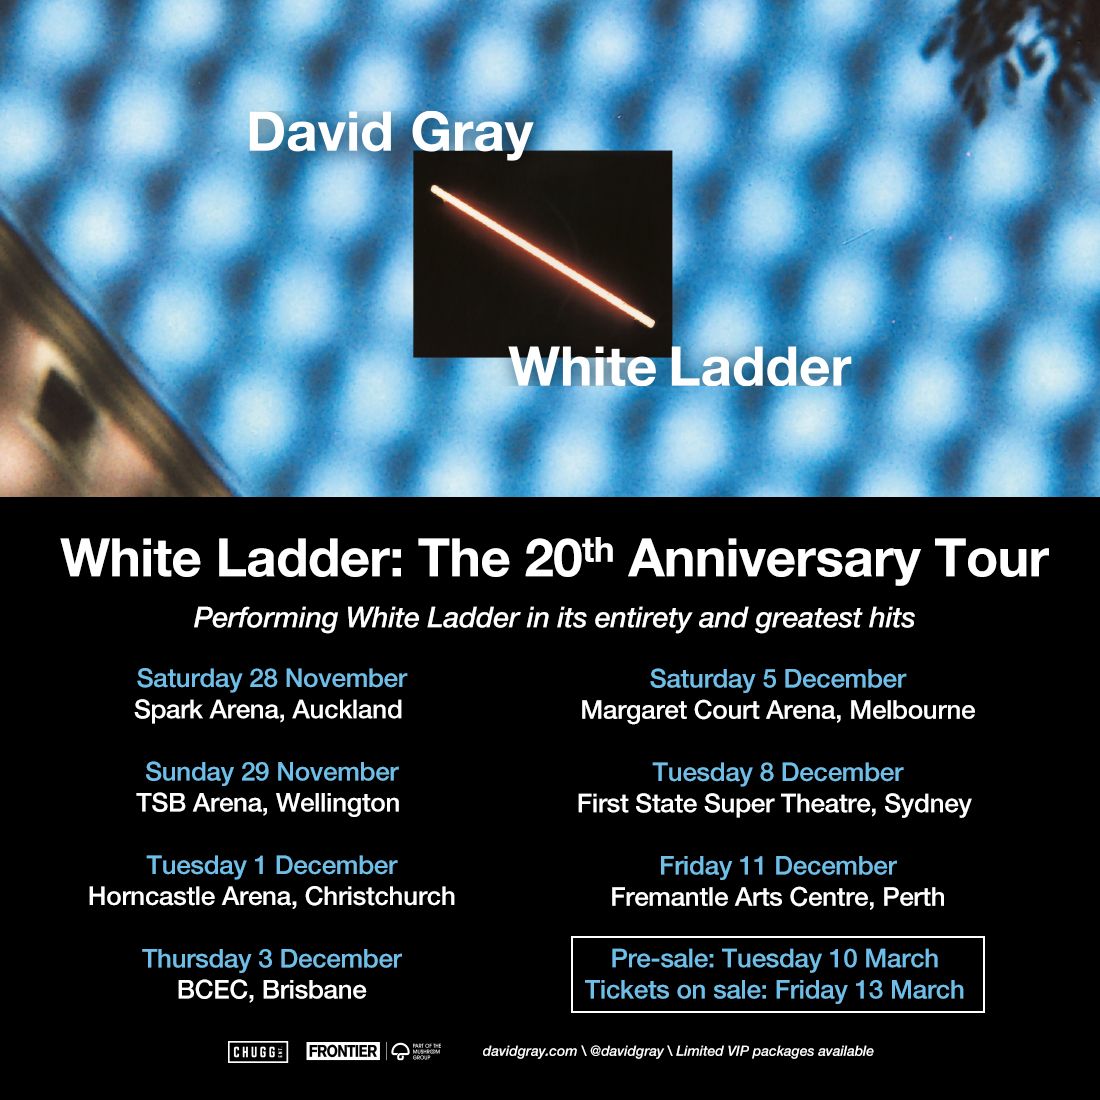 DAVID GRAY ANNOUNCES AUS-NZ DATES FOR WHITE LADDER: THE 20TH ANNIVERSARY TOUR